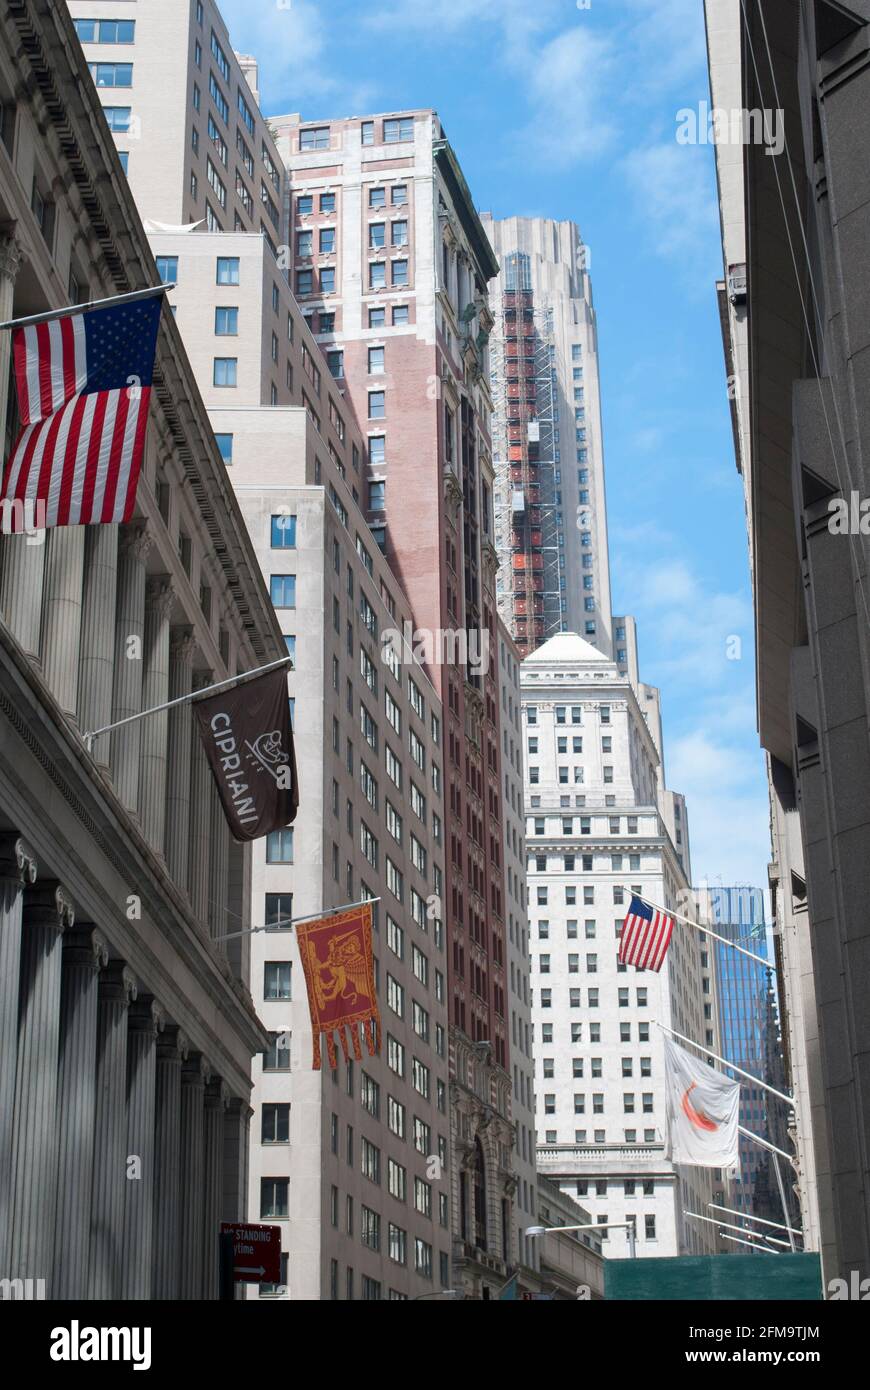 Wall Street, New York, USA. Stock market building. Stock Photo